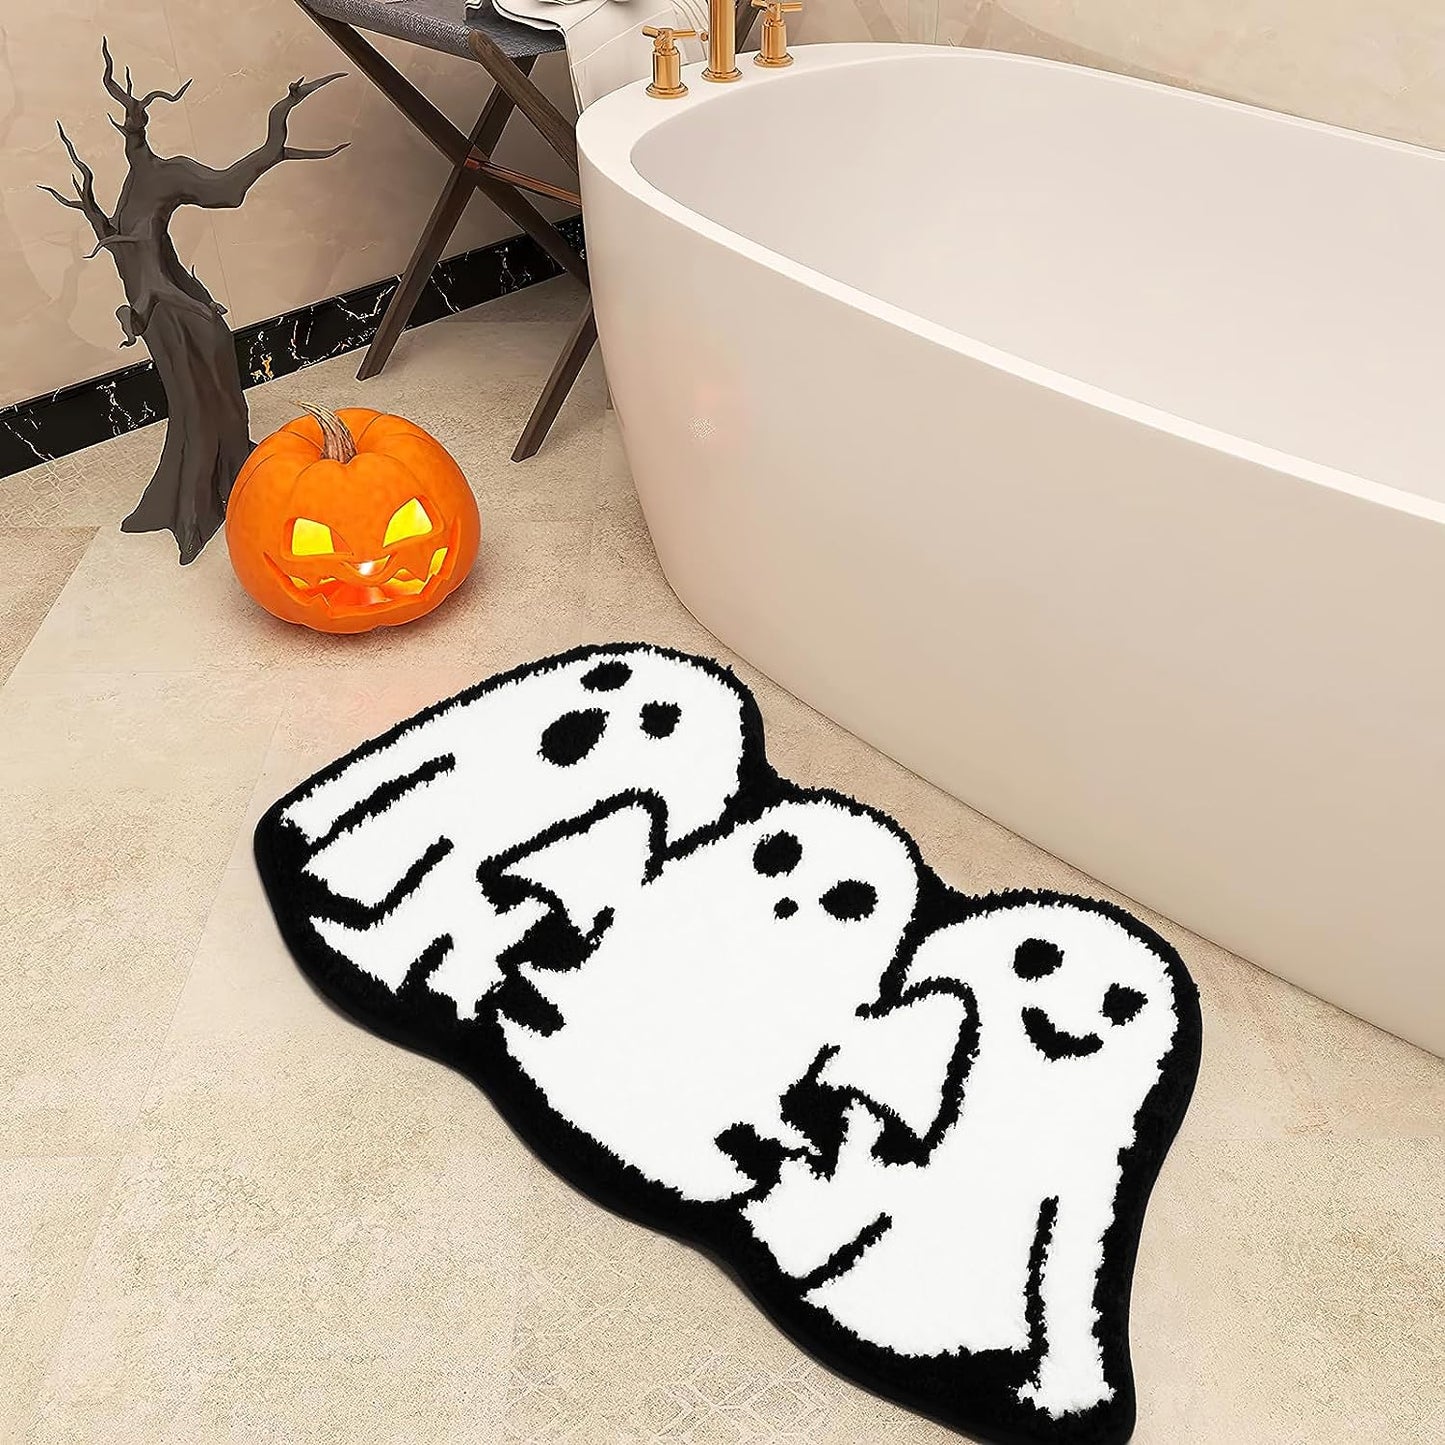 Feblilac Halloween Bath Mat Ghost Tufted Rug Non Slip Floor Mat for Bathroom Kitchen Plush Rug Soft Absorbent Bath Tub Carpet Room Decor Halloween Supplies